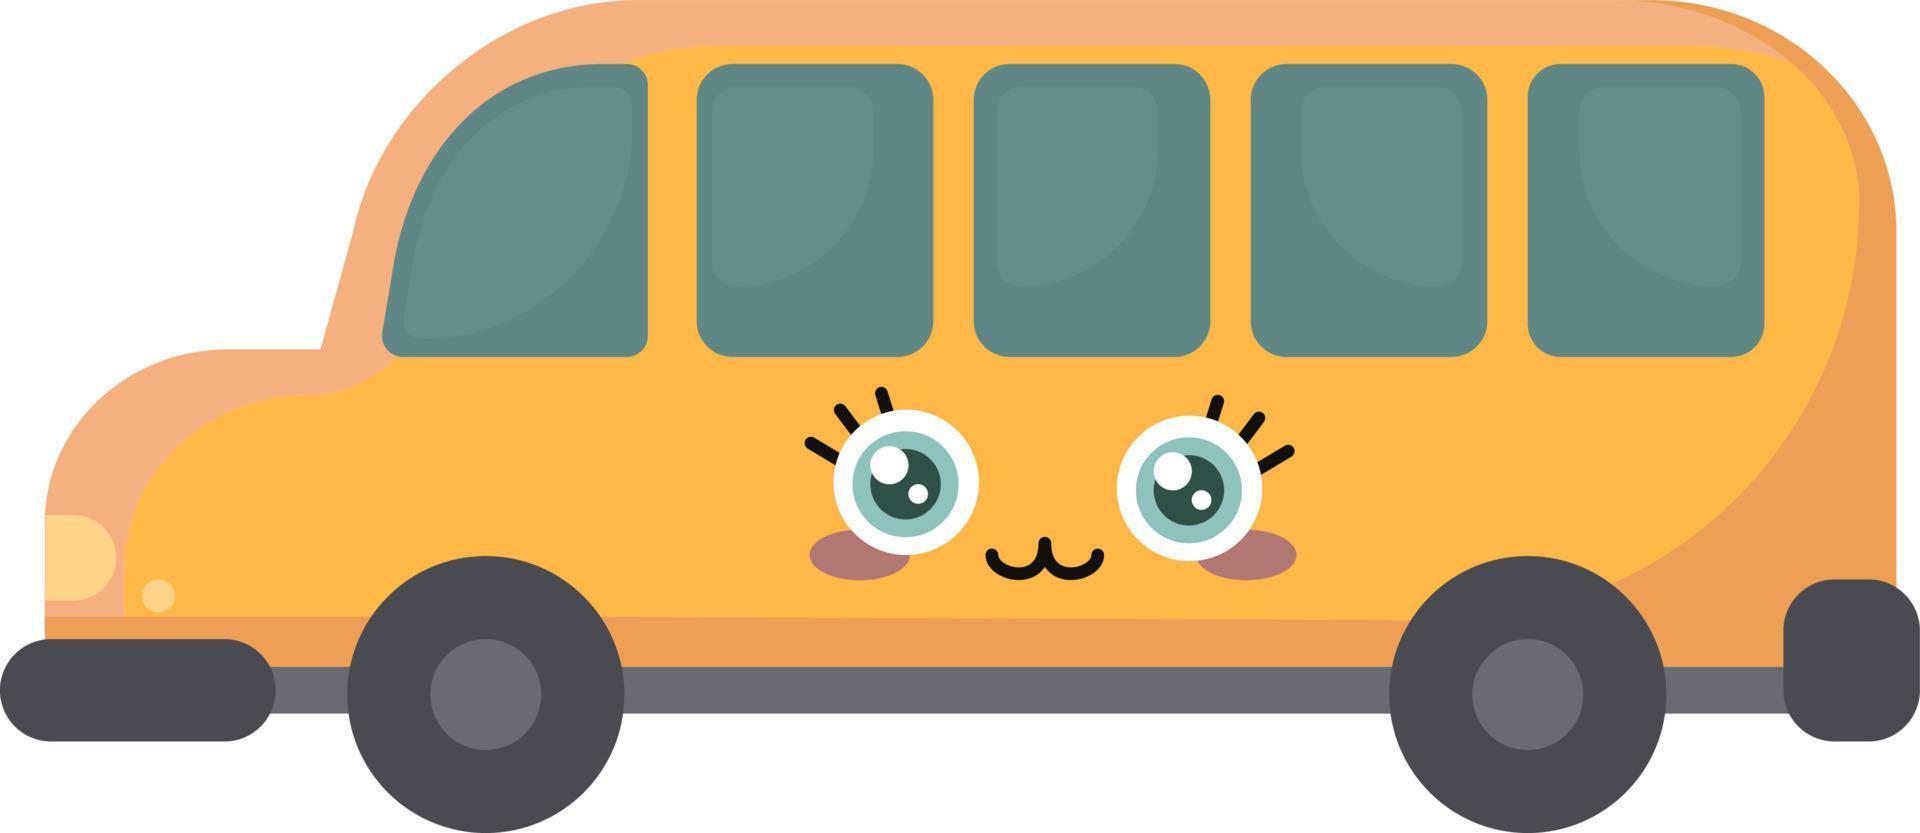 School bus, illustration, vector on white background.